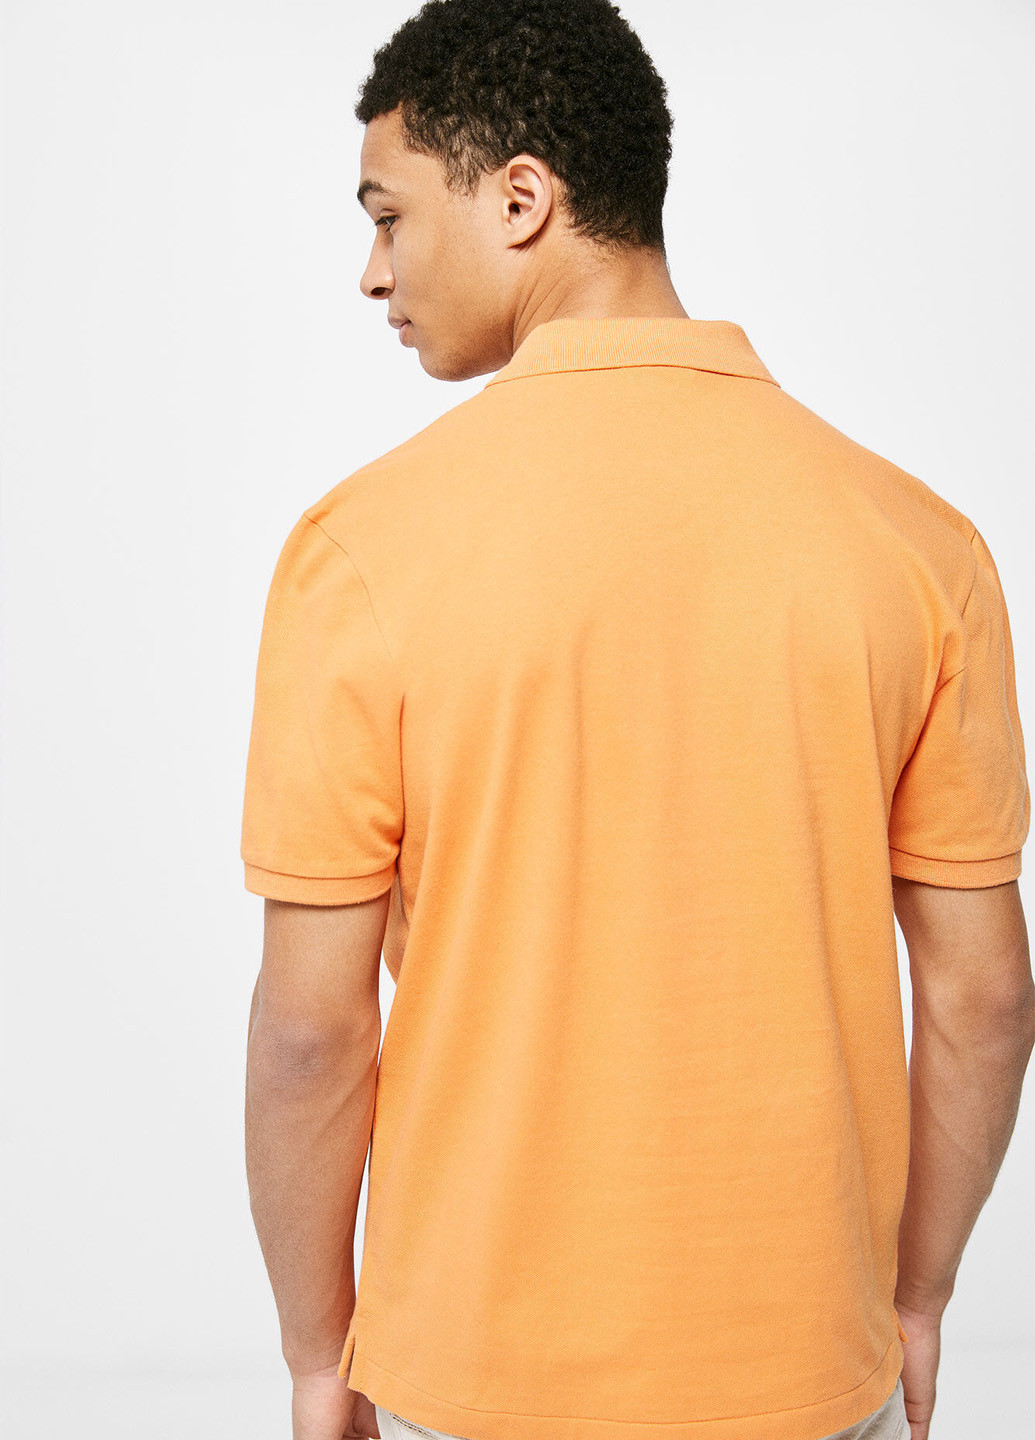 Оранжевая футболка-поло для мужчин Springfield однотонная